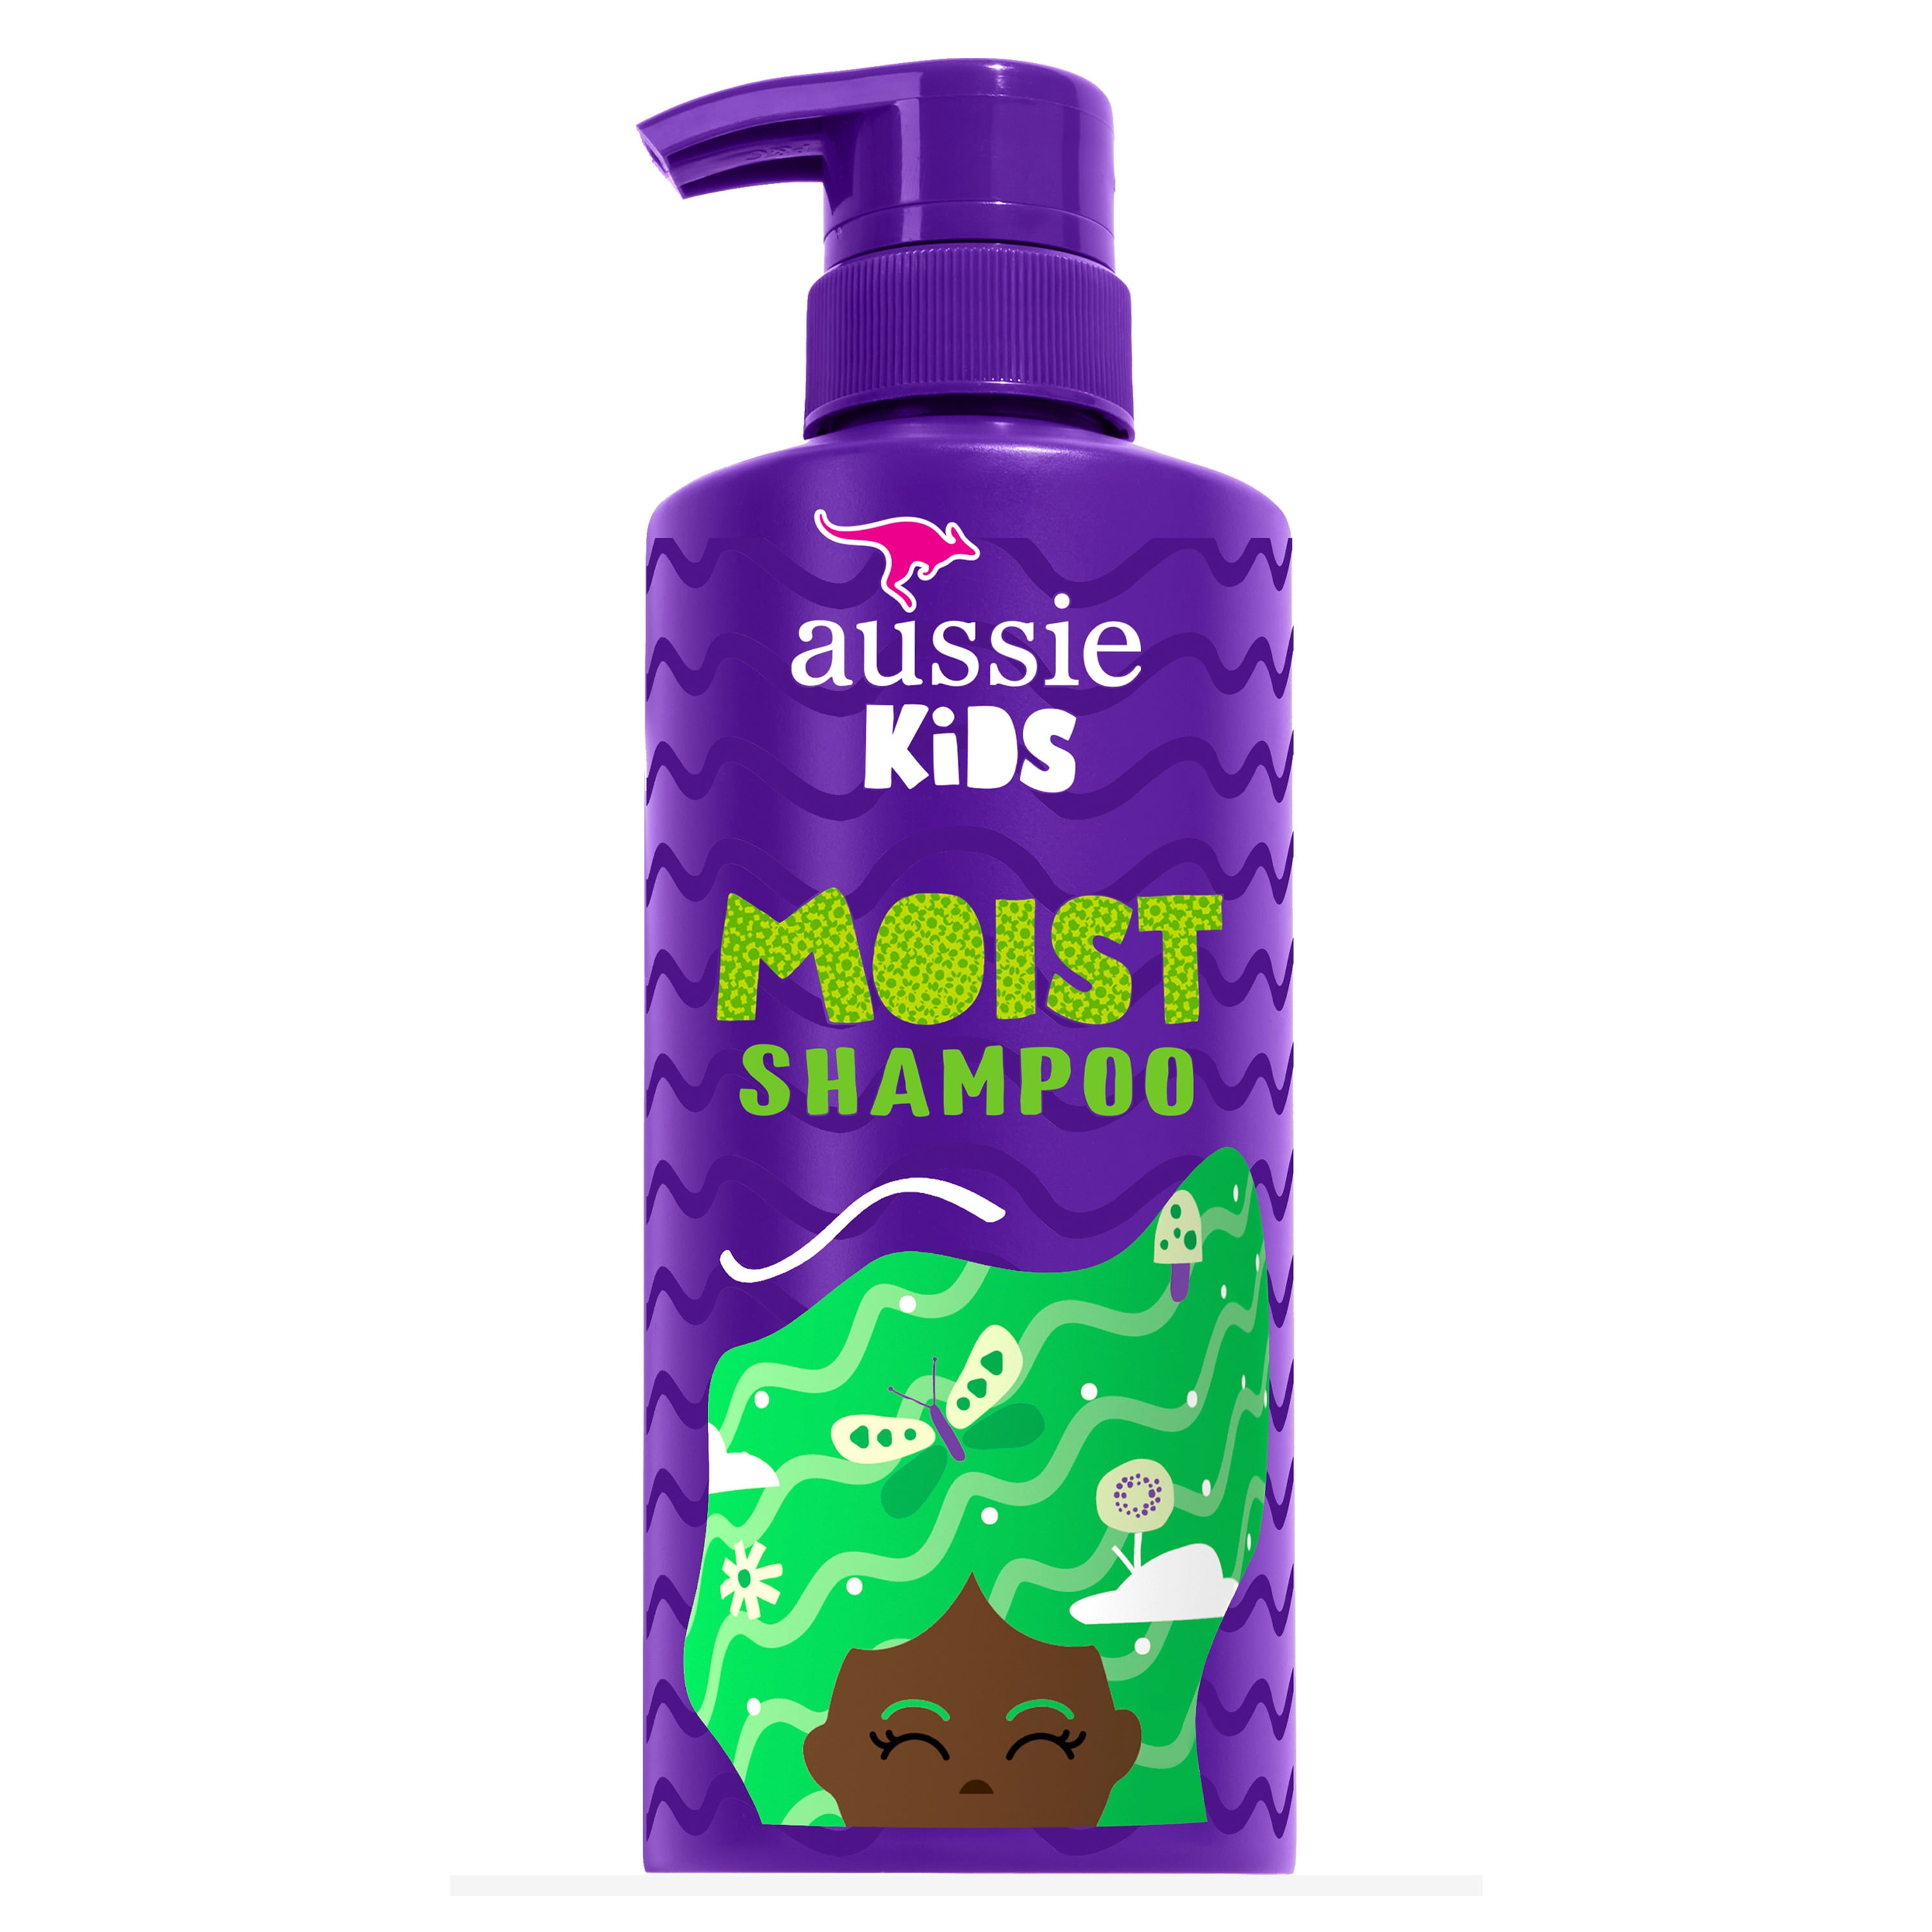 det sidste dækning web Aussie Kids Shampoo, Moisturizes Hair, Sulfate Free, For all hair types  16oz - Walmart.com